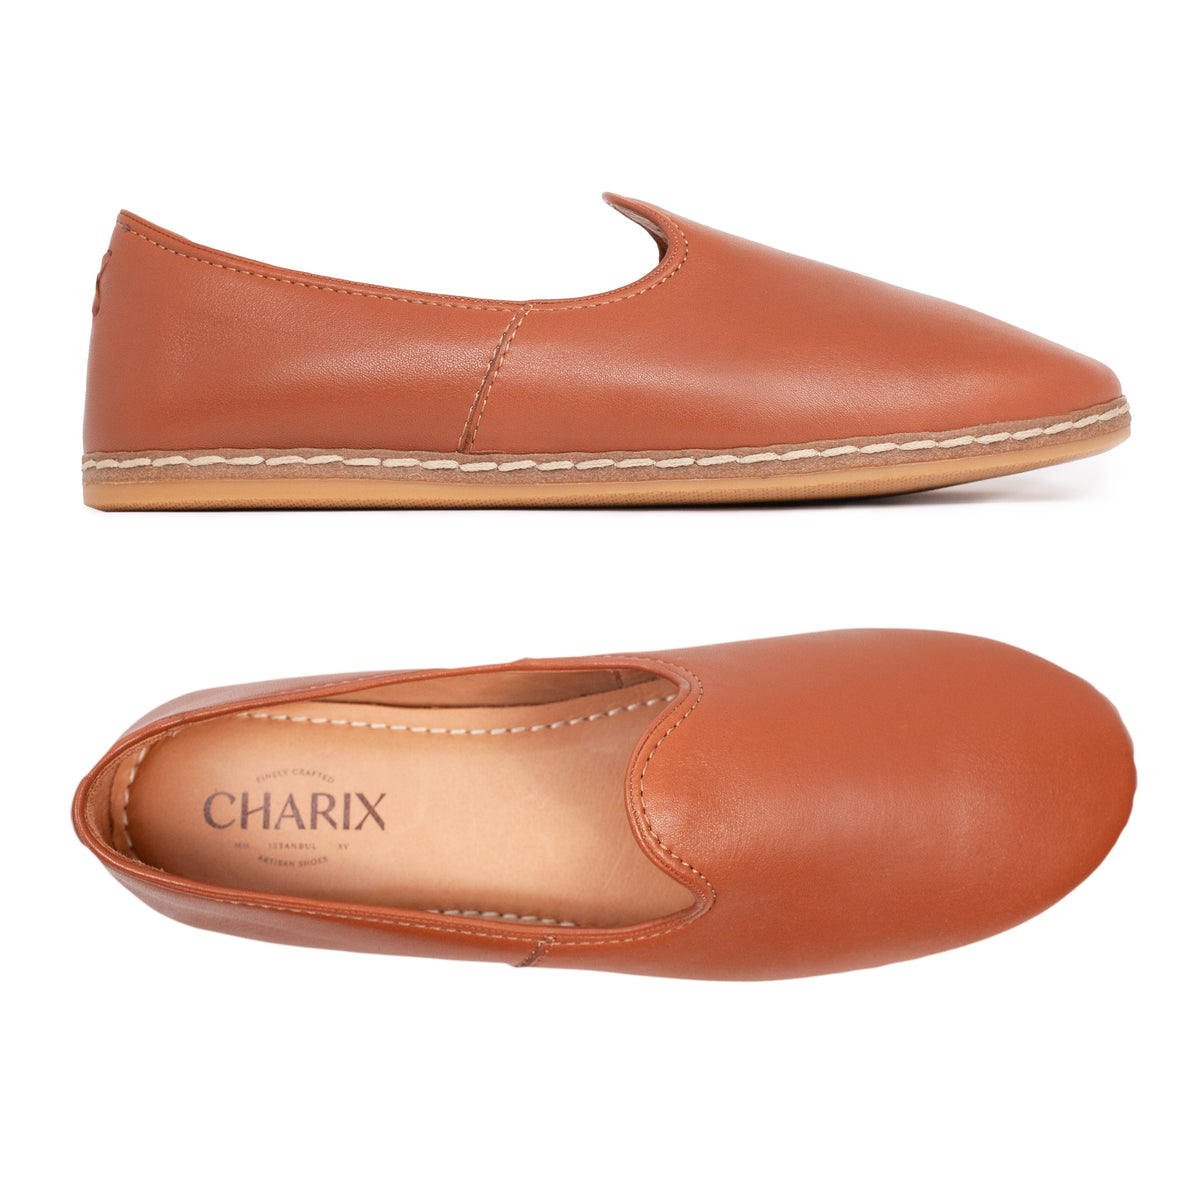 Camel - Women's - Charix Shoes